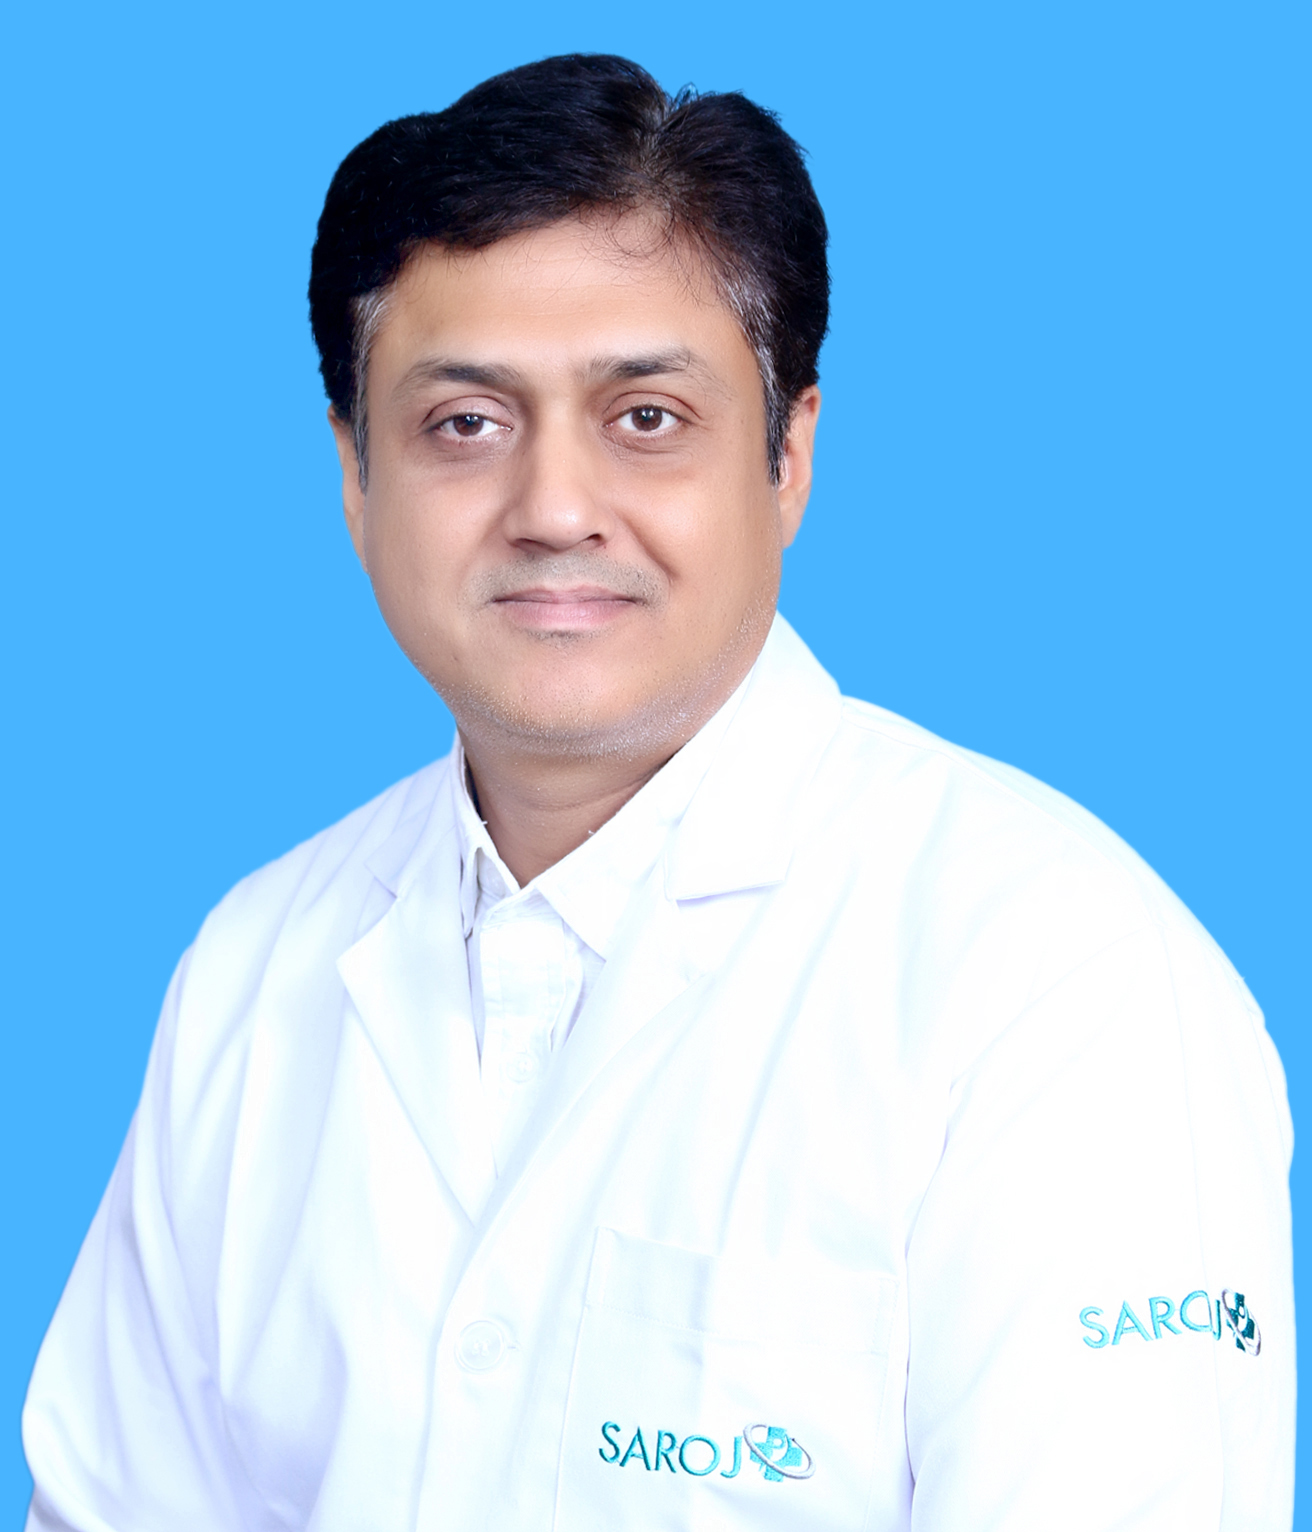 Dr. Anuj Malhotra